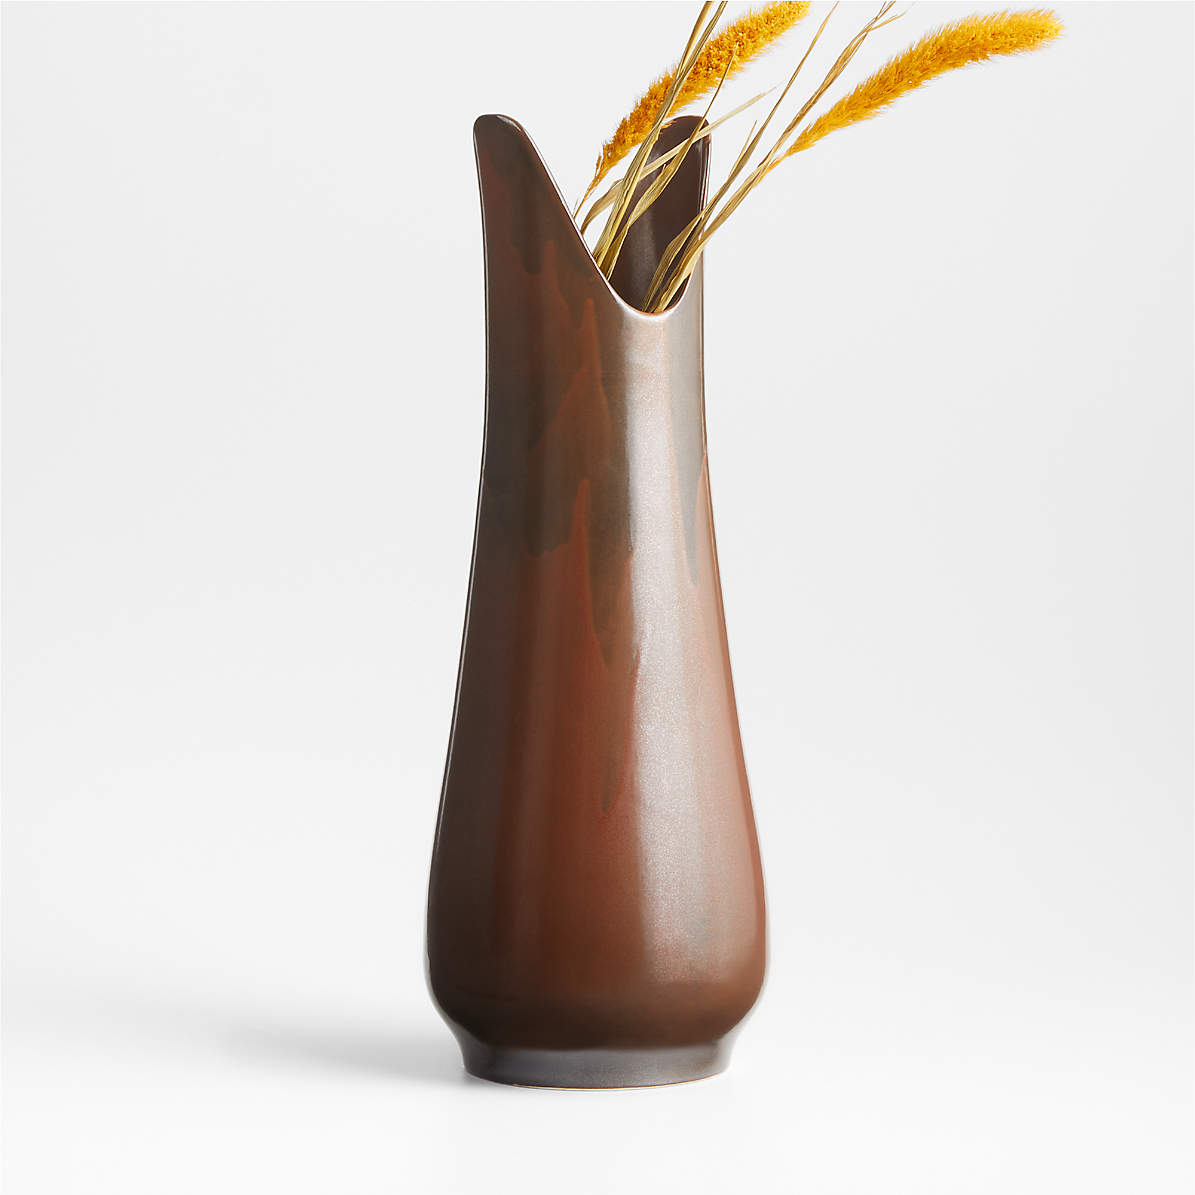 Etten Brown Ceramic Vase 17 + Reviews